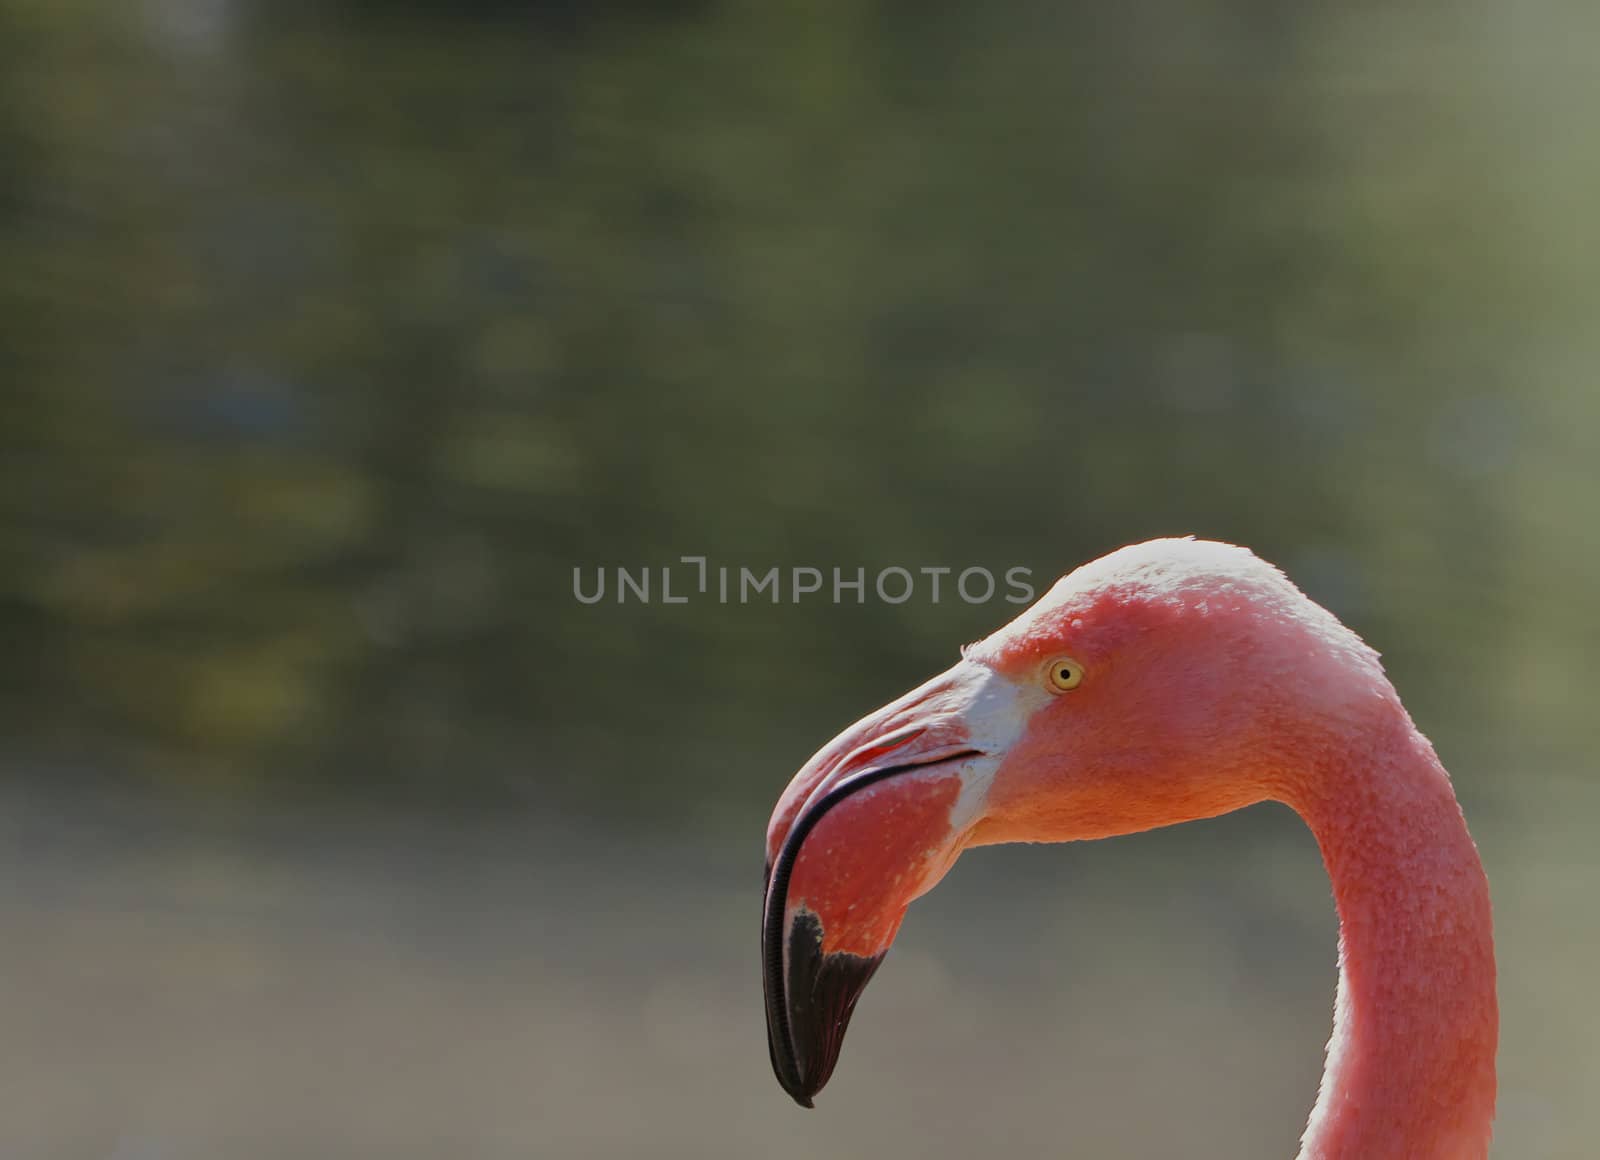 Flamingo Head in Profile against a soft focus pond or lagoon